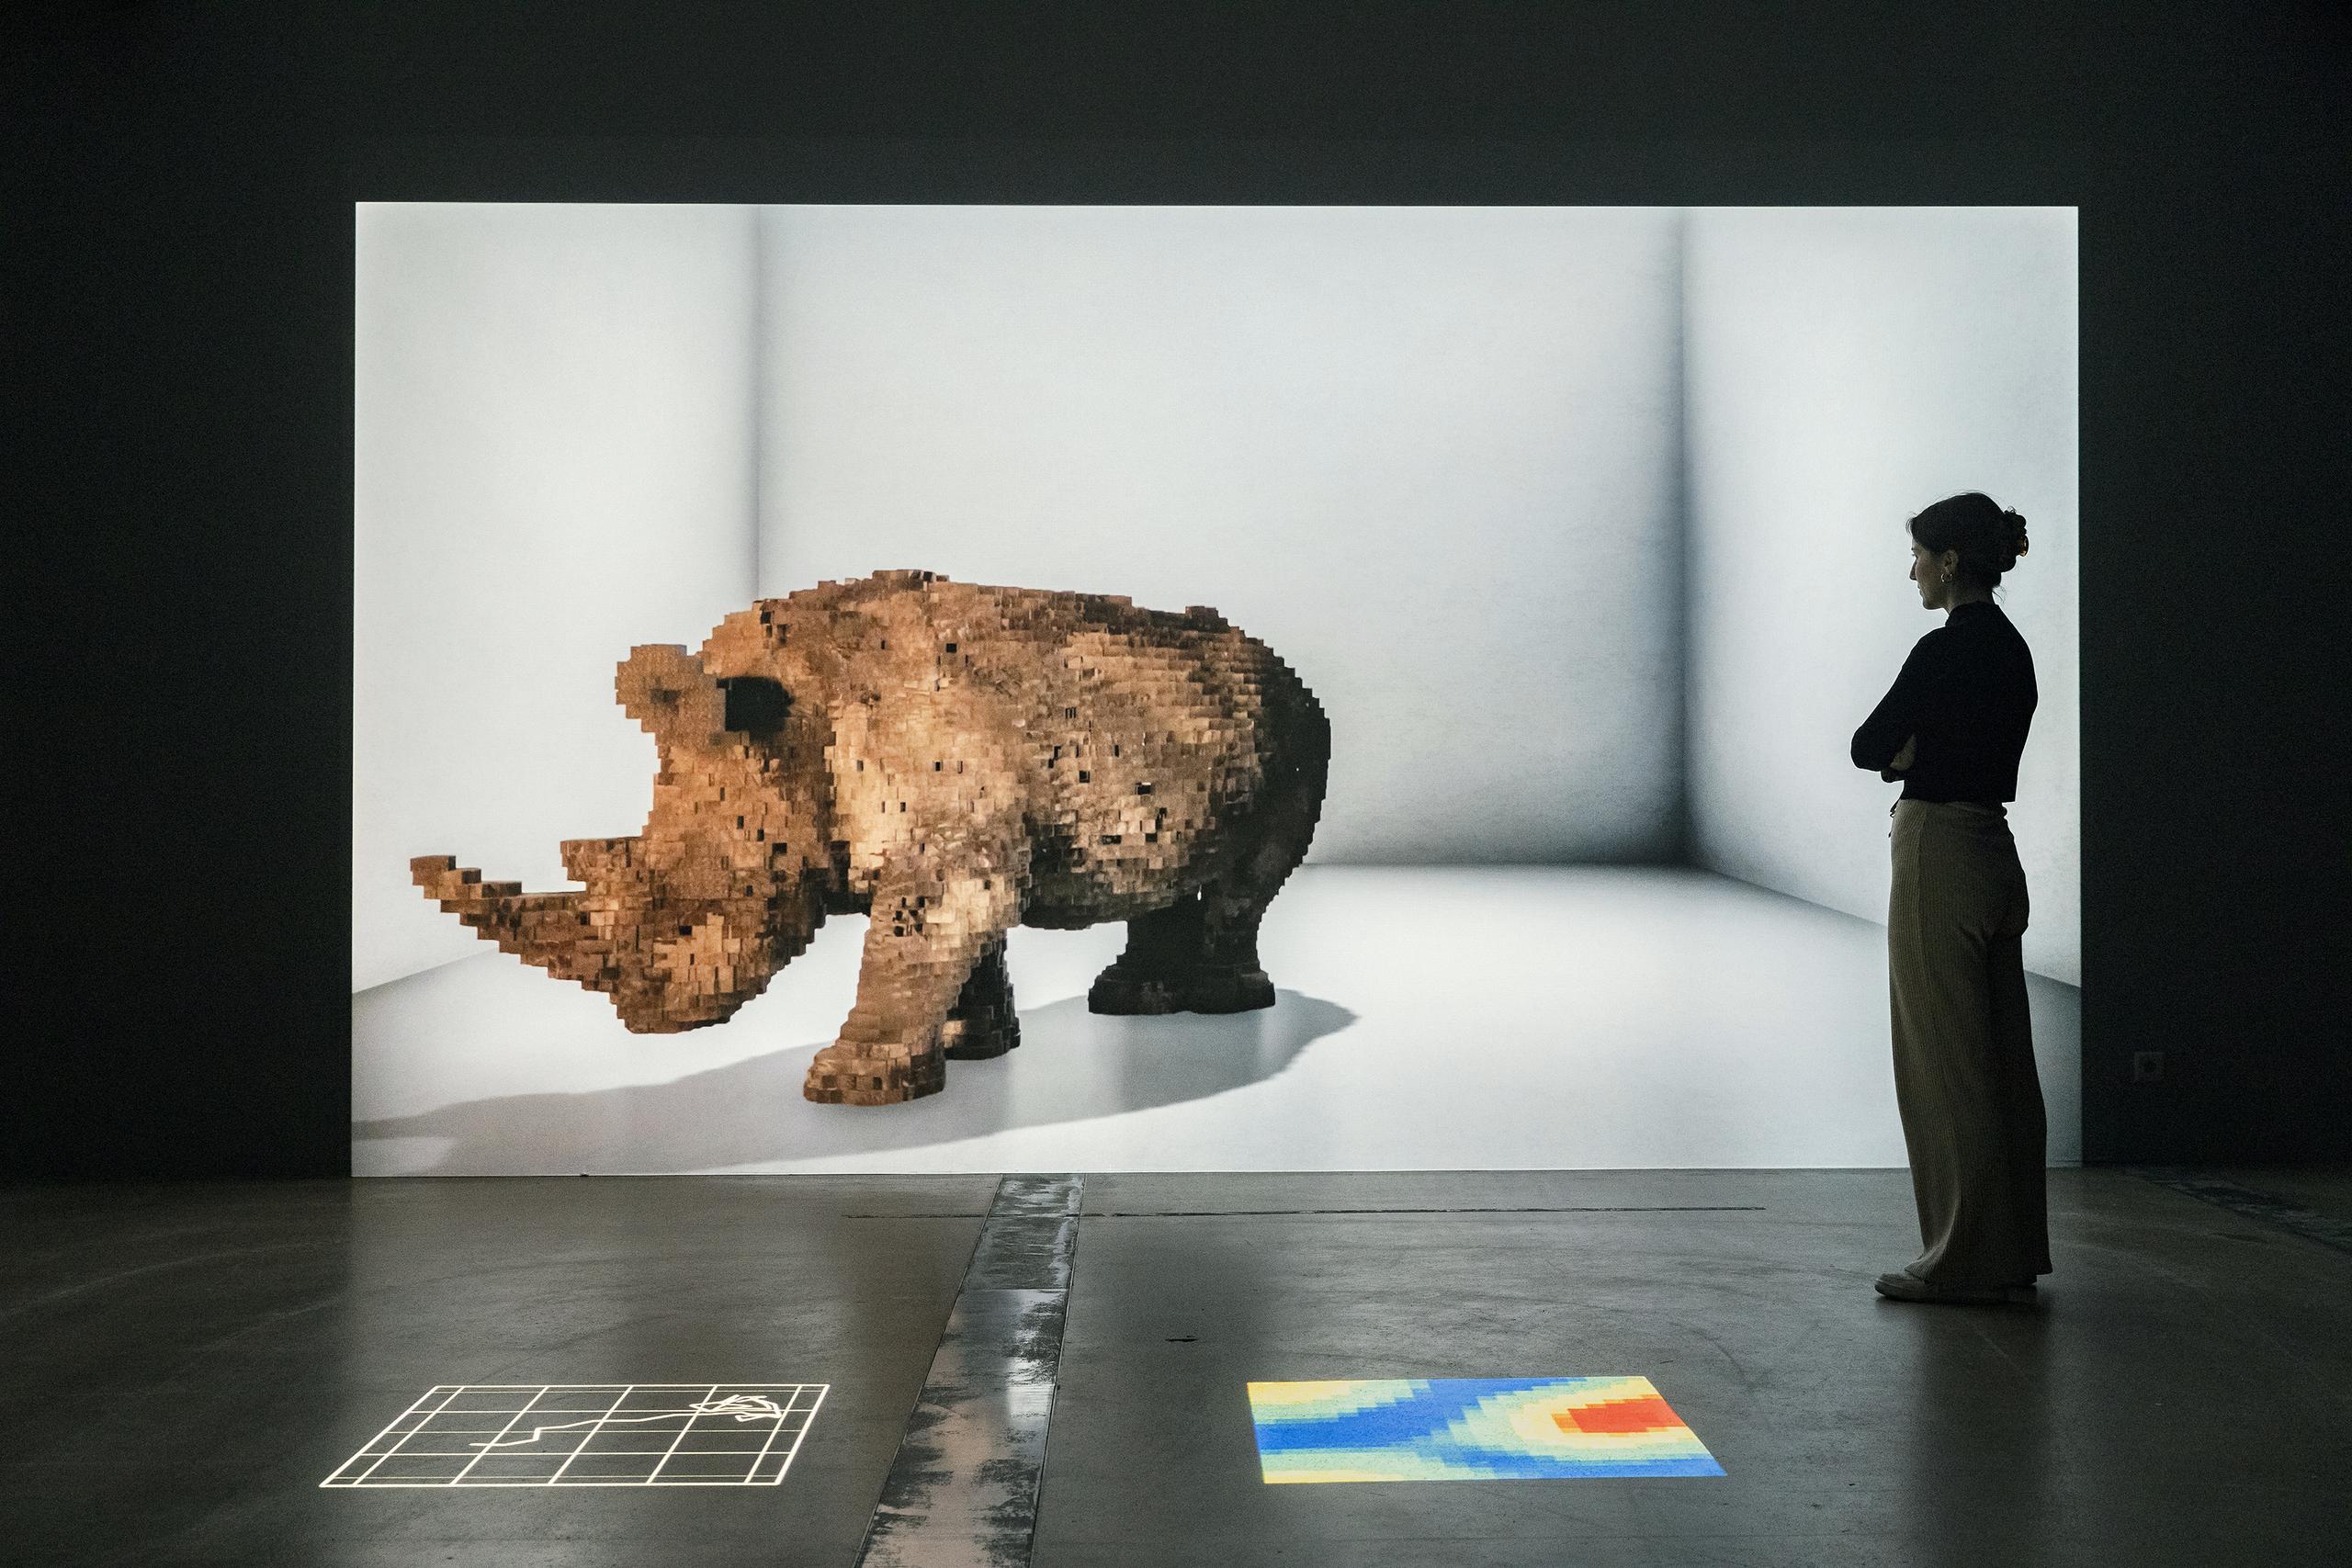 Ein lebensgrosses Nashorn wird in den Ausstellungsraum projiziert 